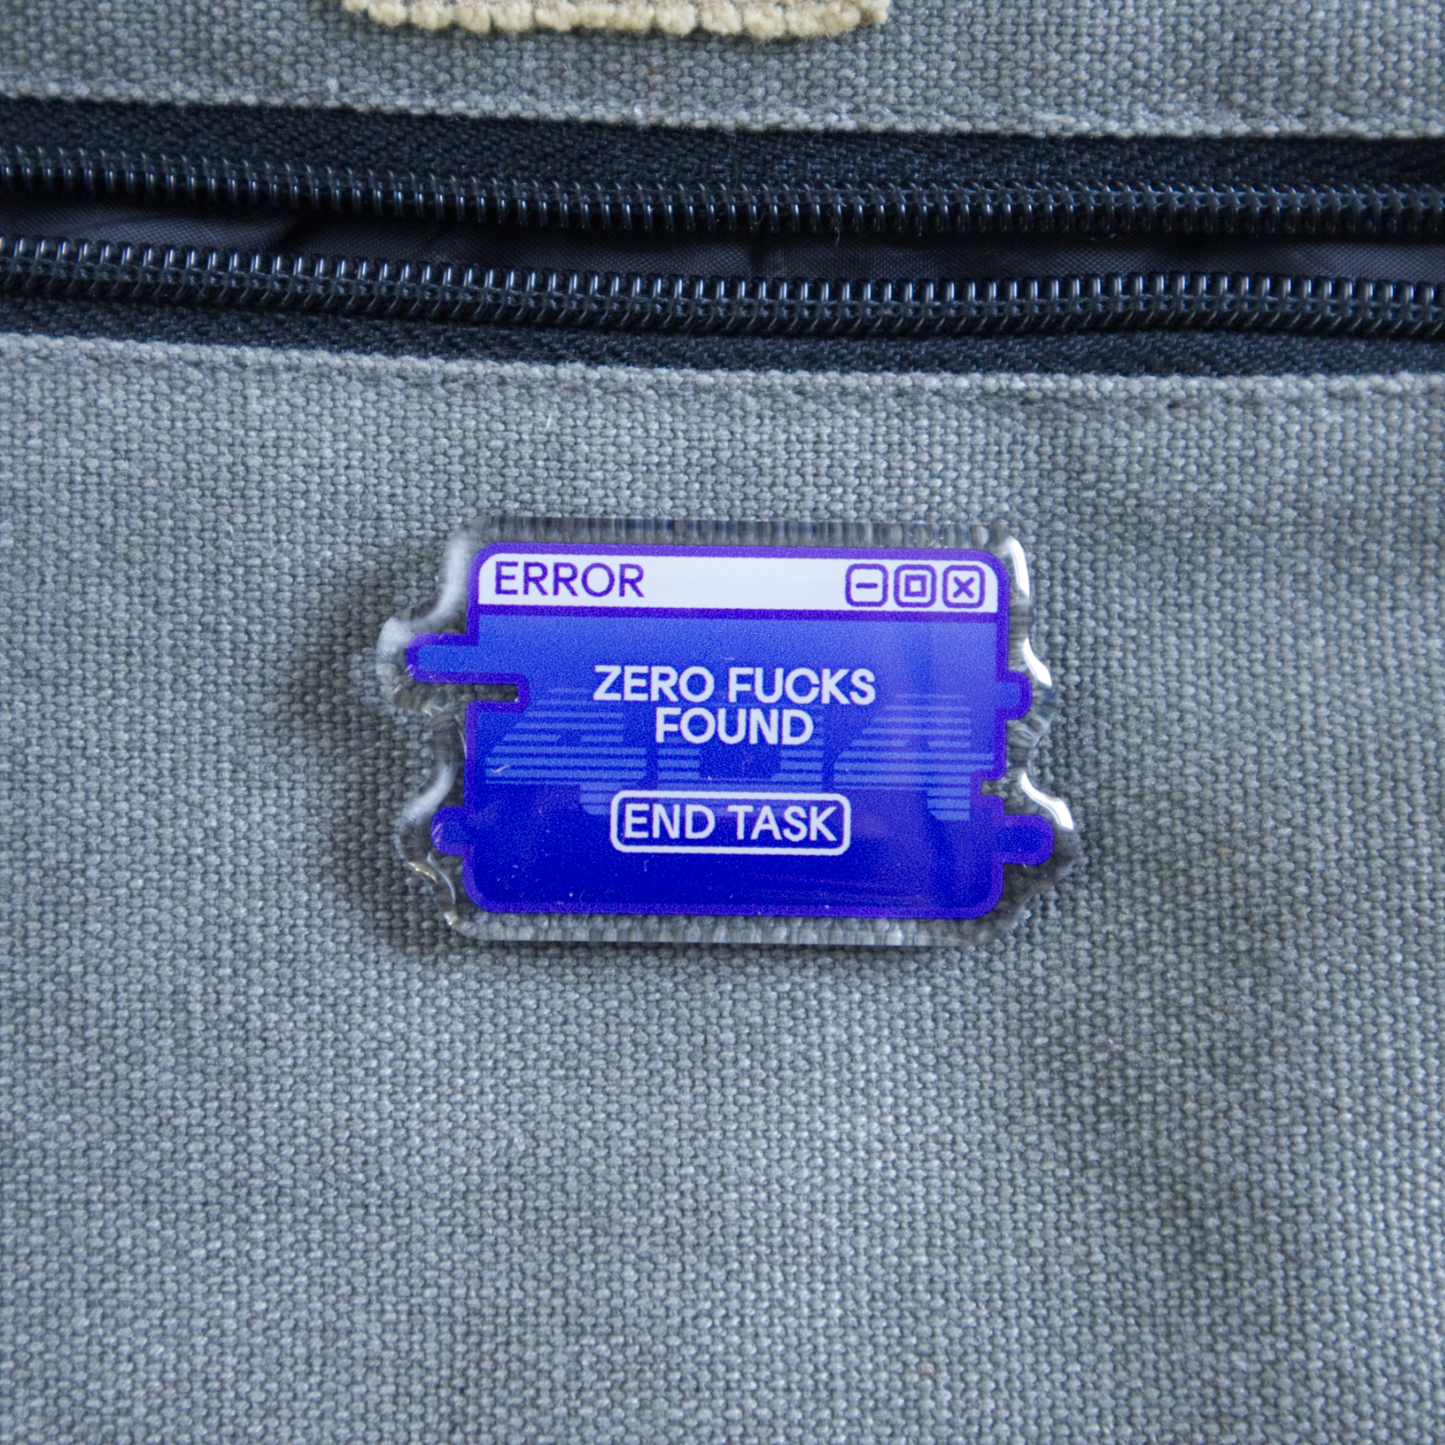 "Zero F*cks Found" System Message Acrylic Pin